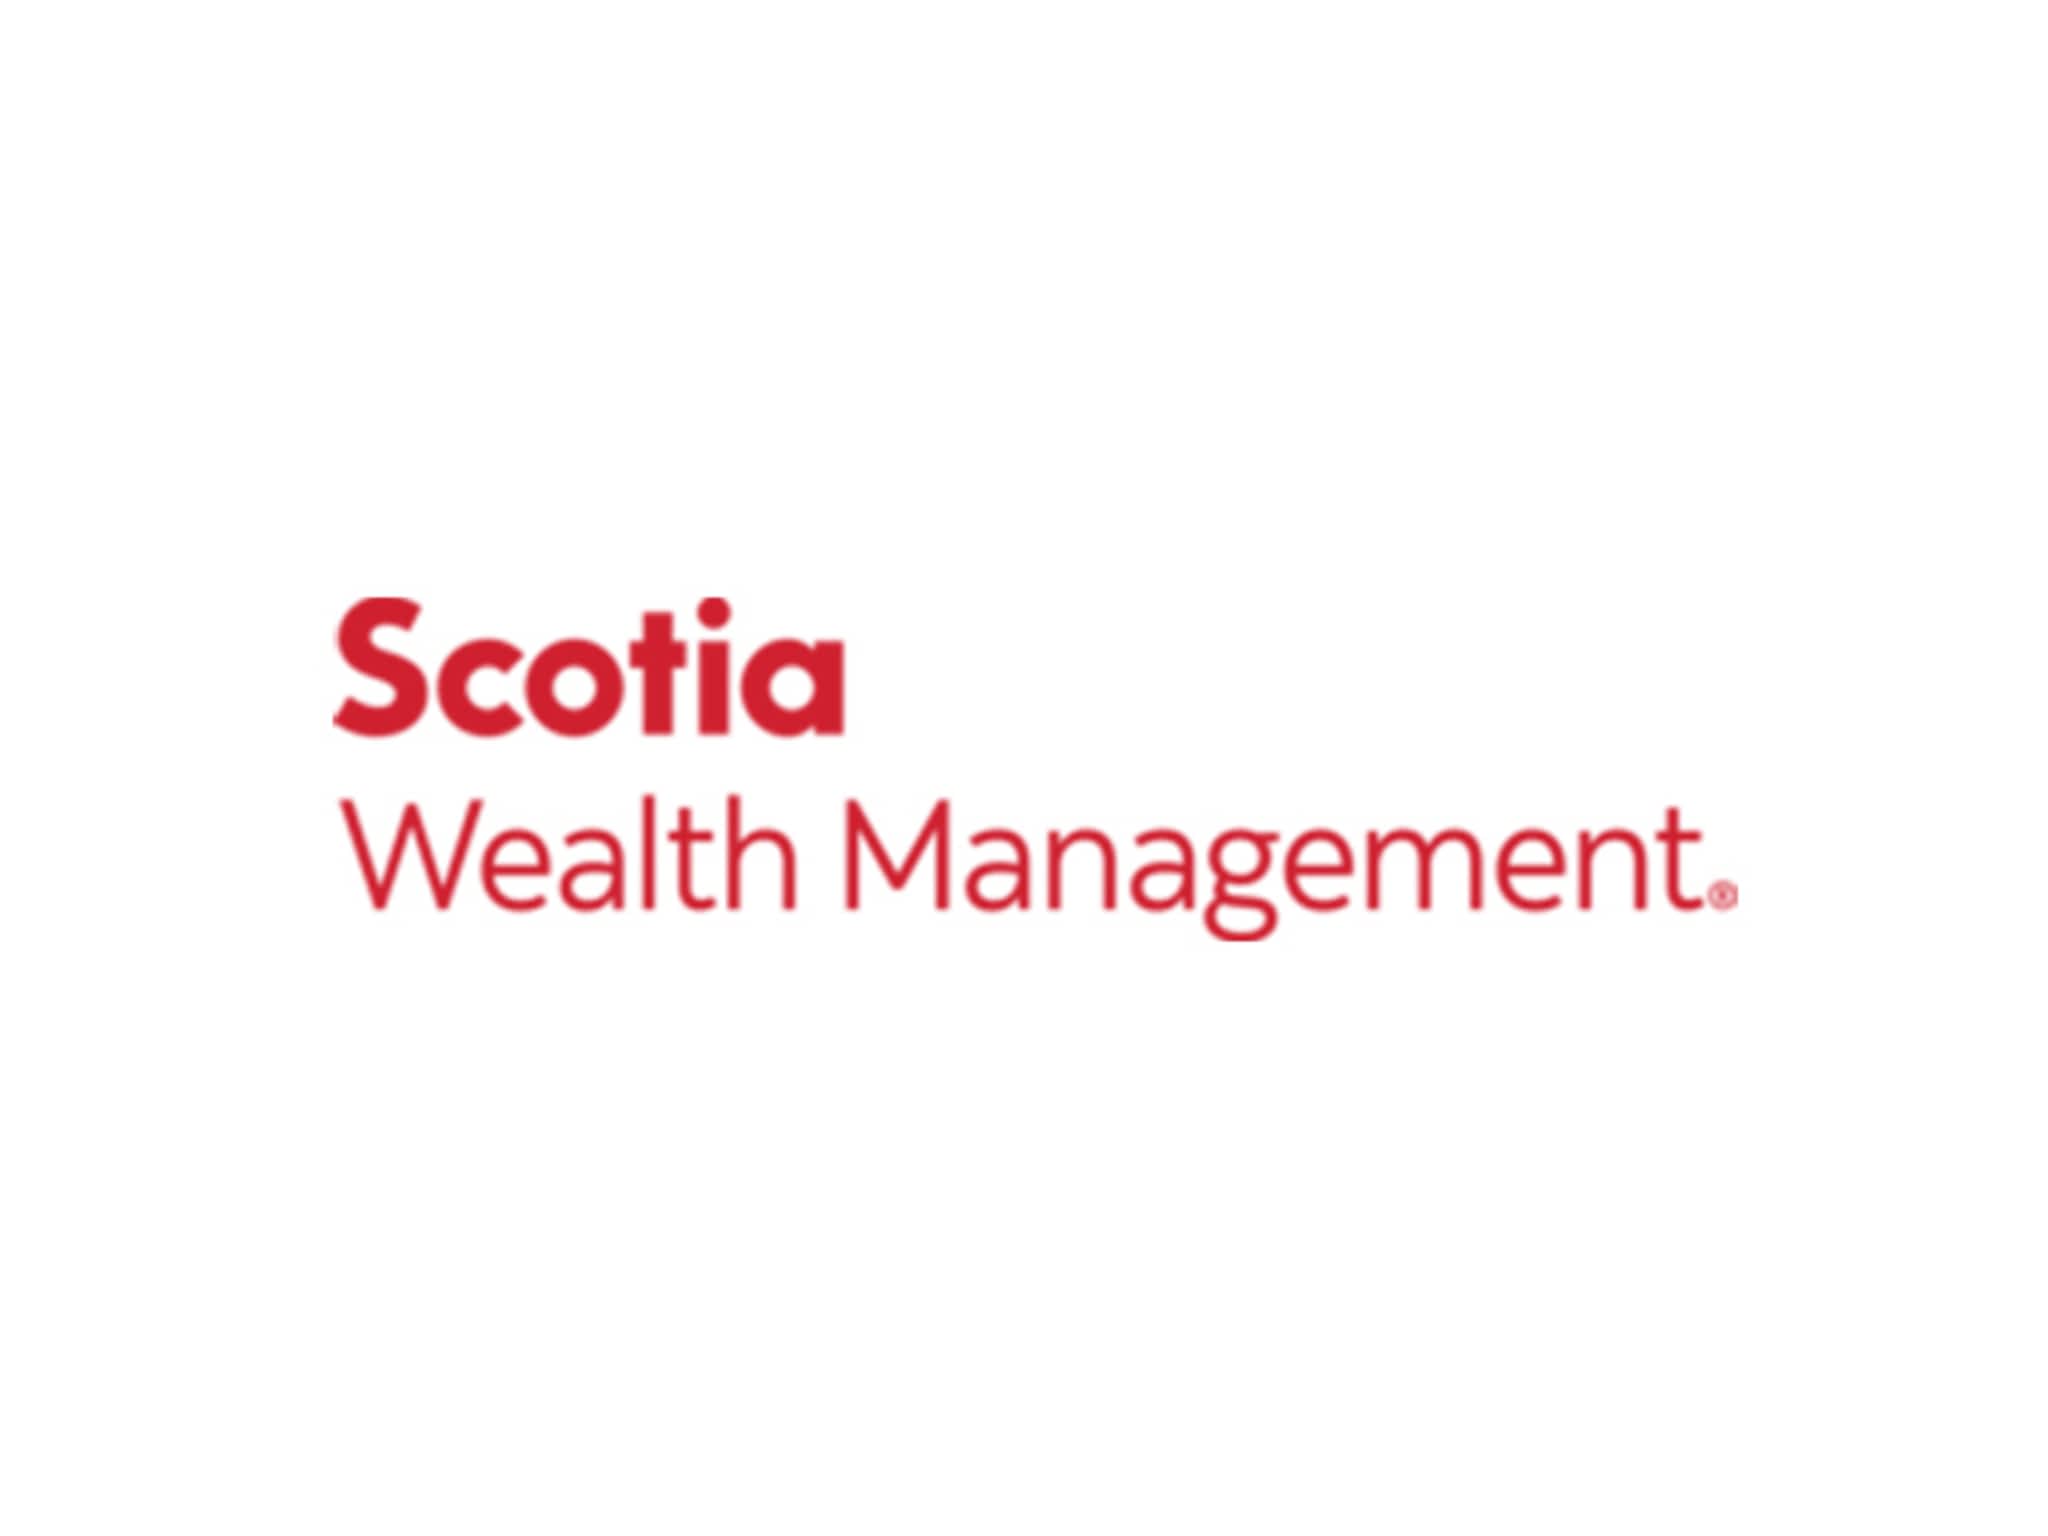 photo Jacqueline Knowles - Total Wealth Planning - Scotia Wealth Management